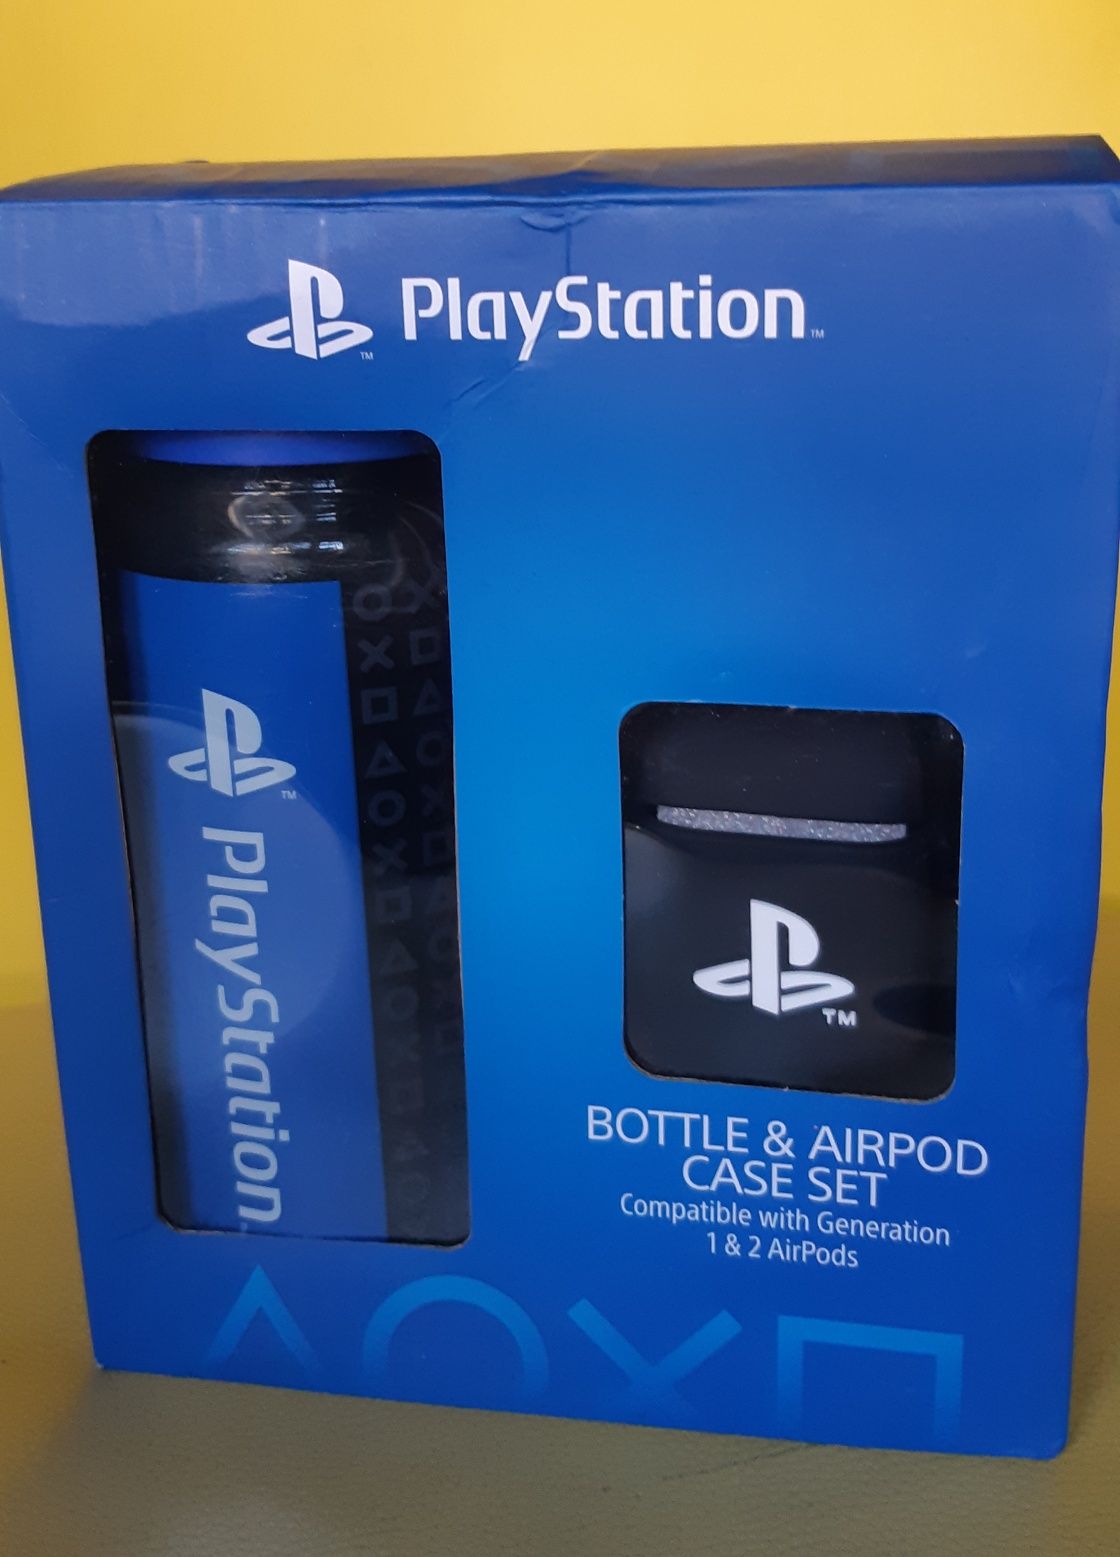 Playstation бутылка кейс aipods